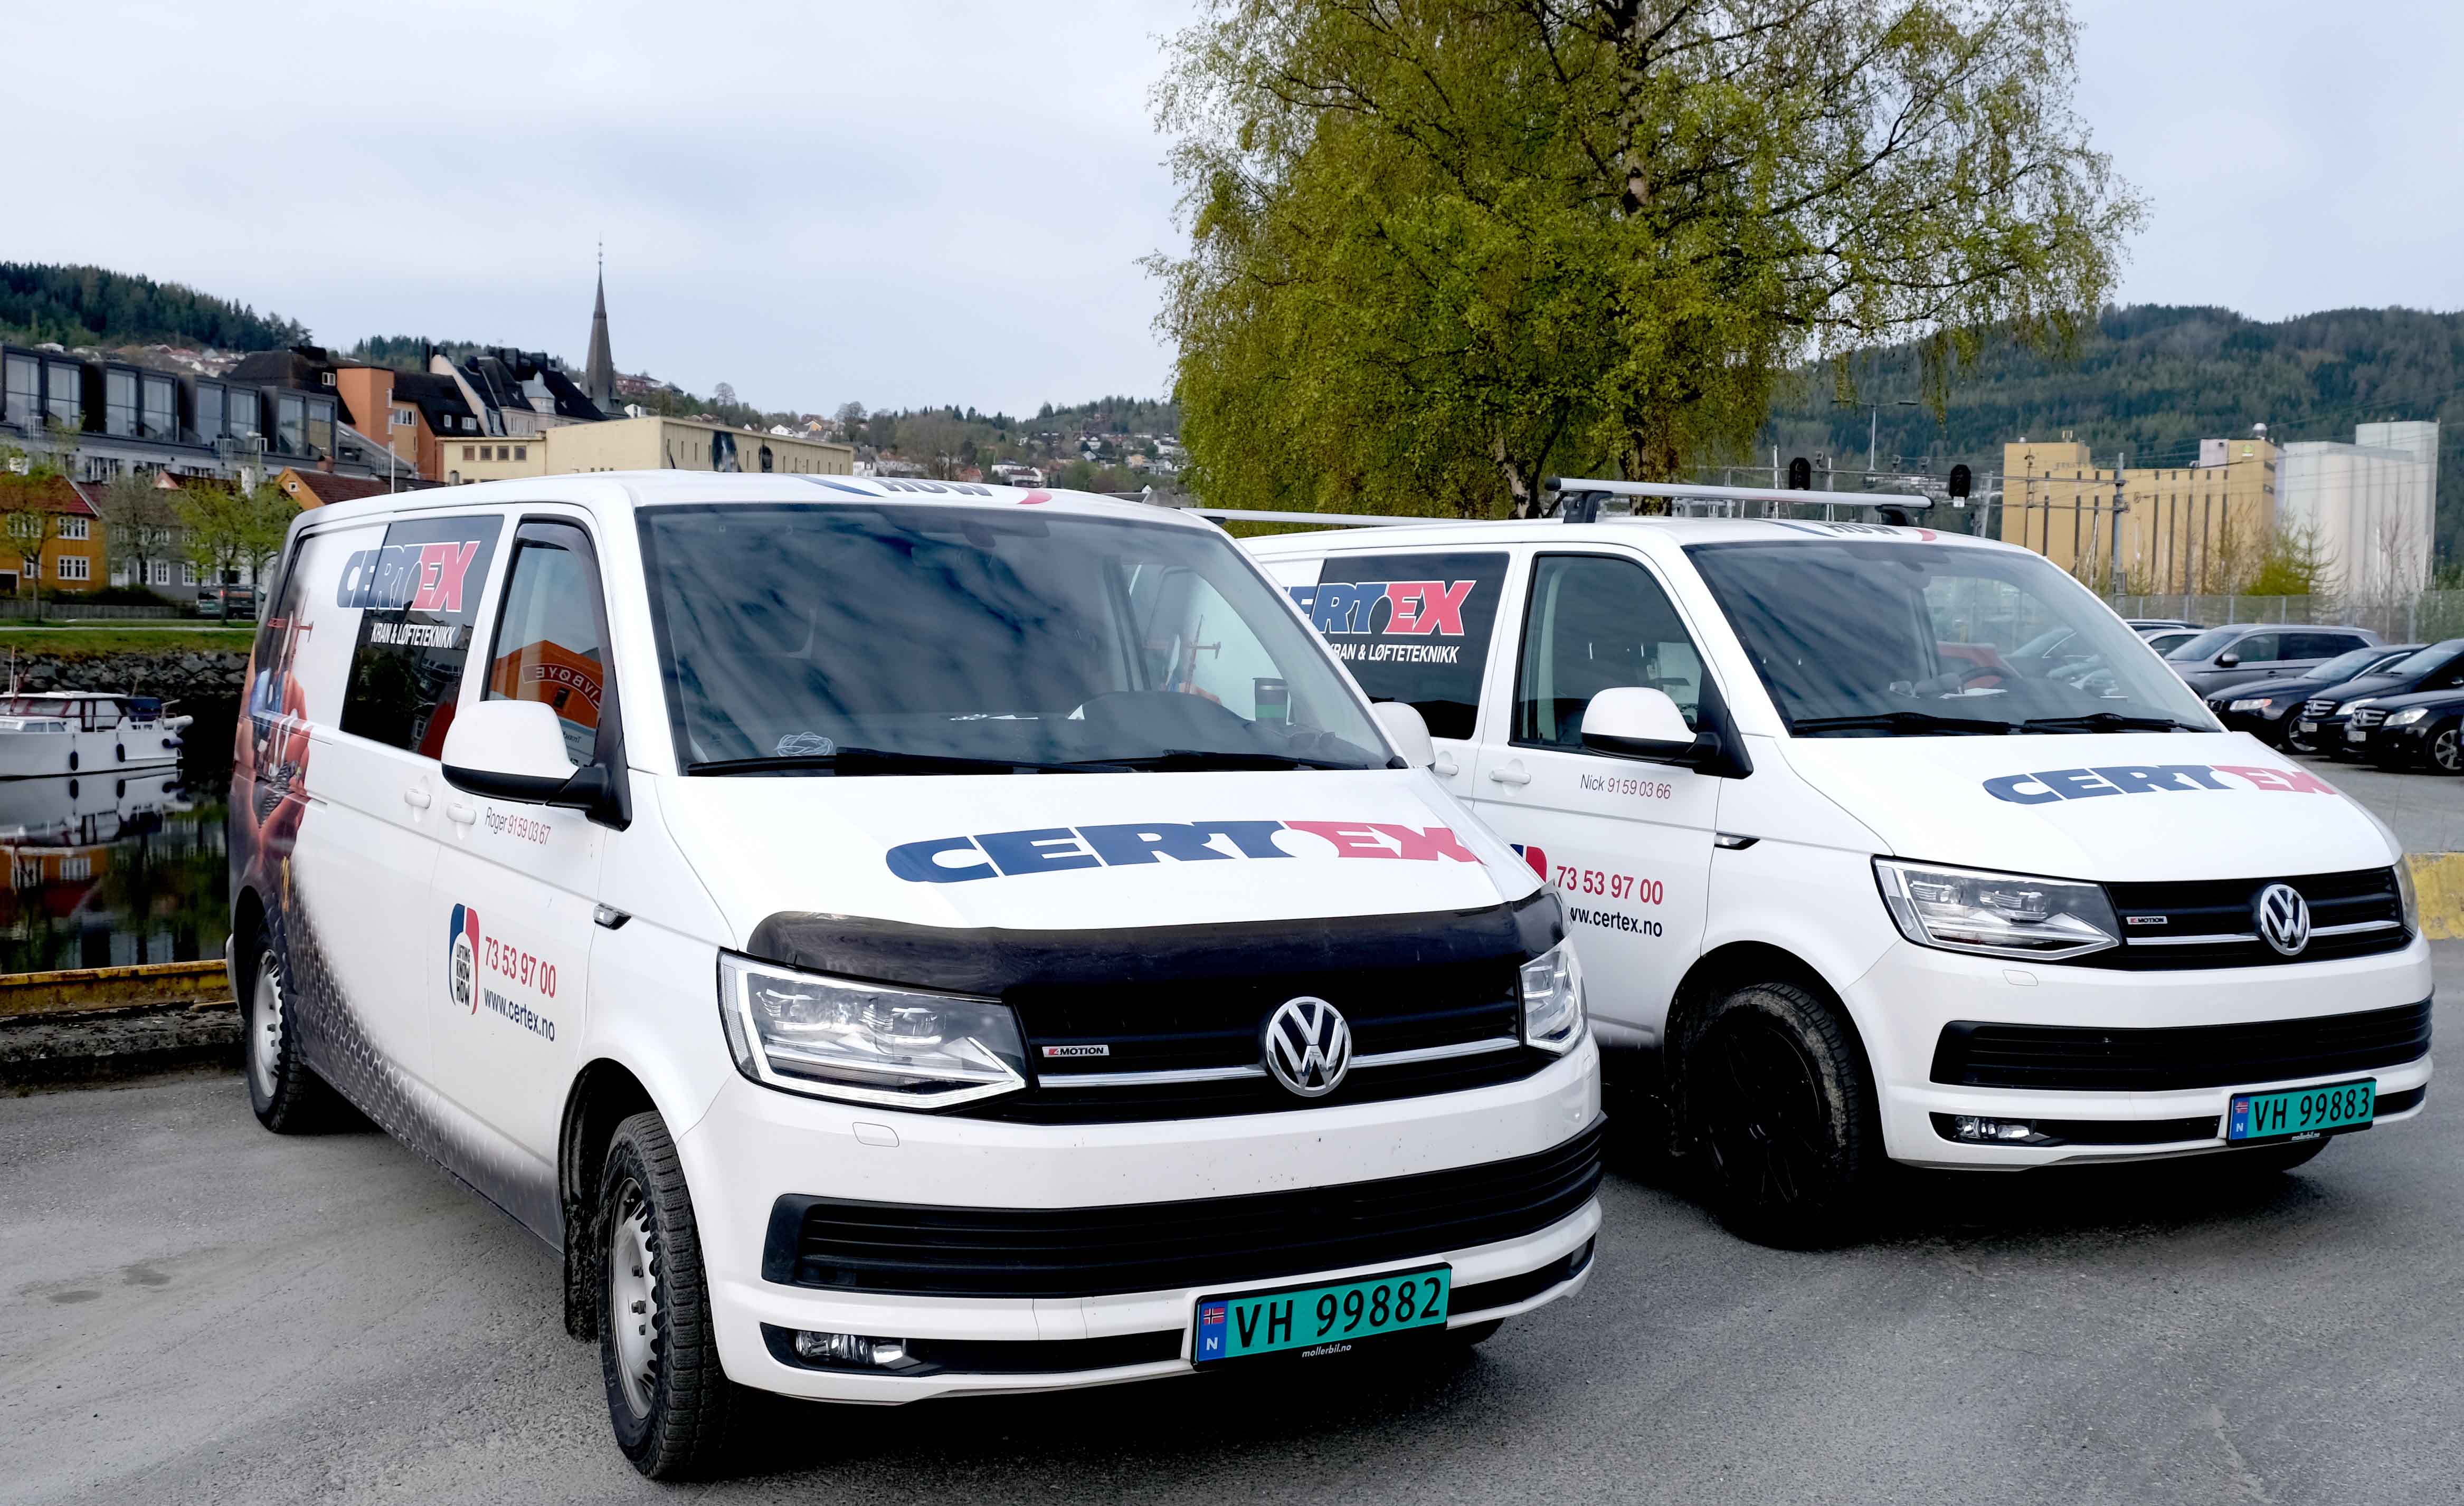 Certex Norge service biler